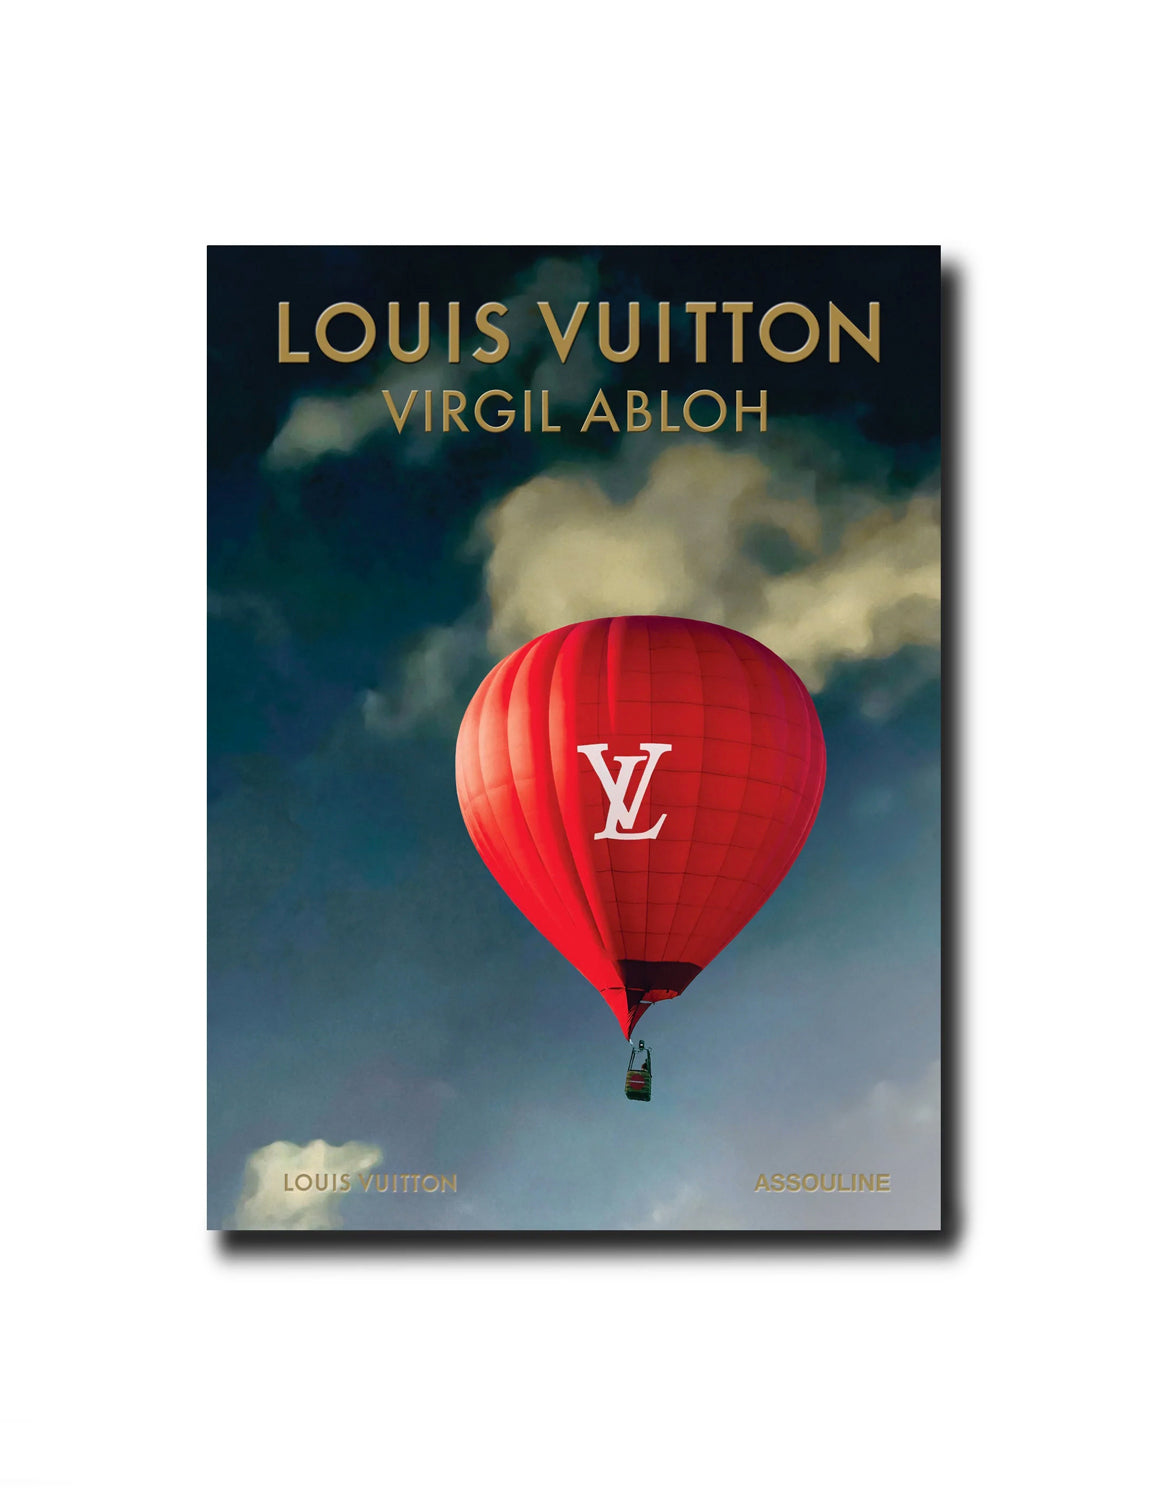 Louis Vuitton: A Passion for Creation Exhibition - A Tour Inside -  nitrolicious.com